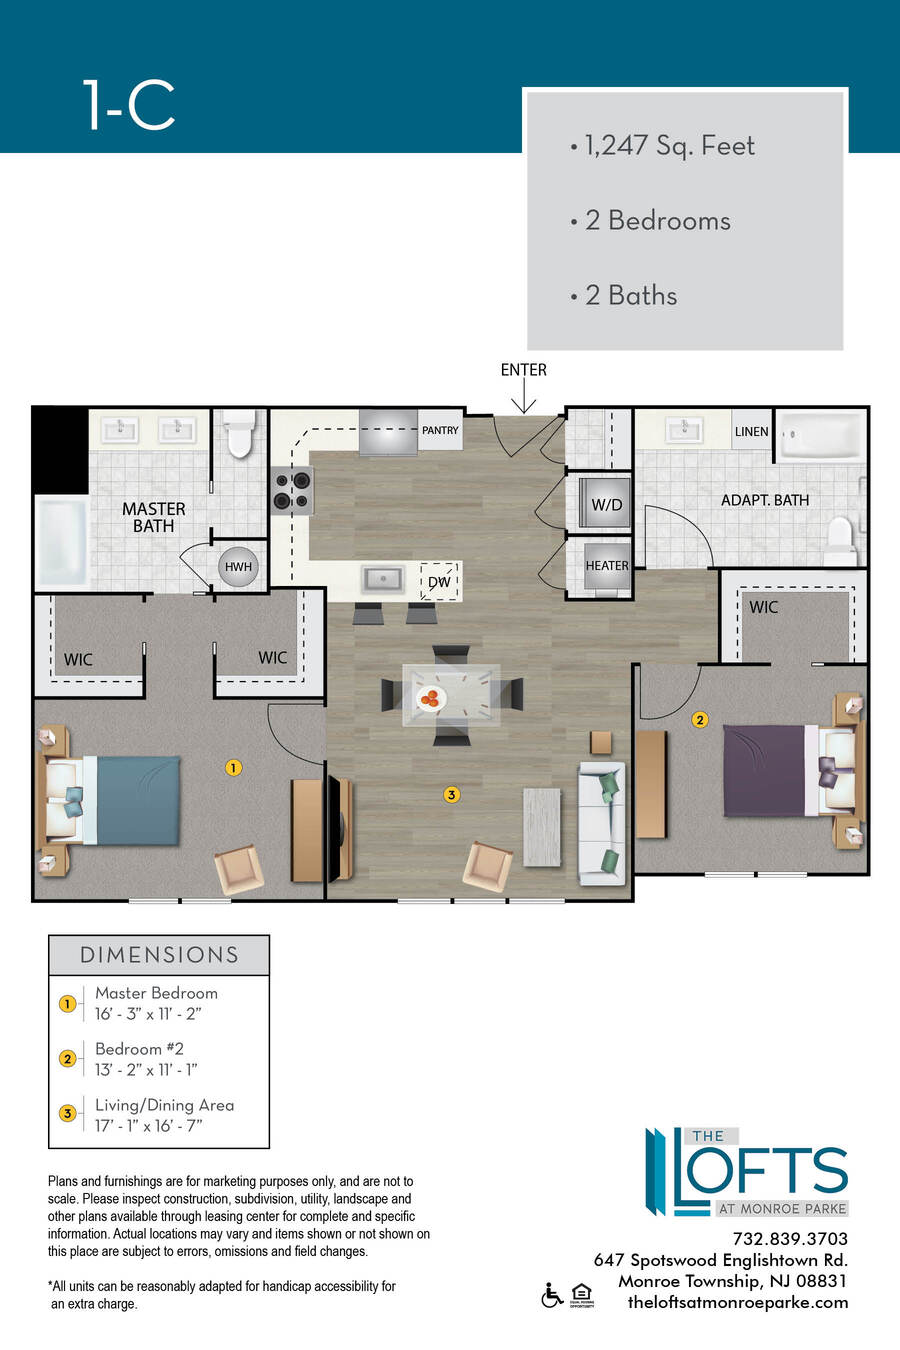 The Lofts at Monroe Park Apartment Floor Plan 1C